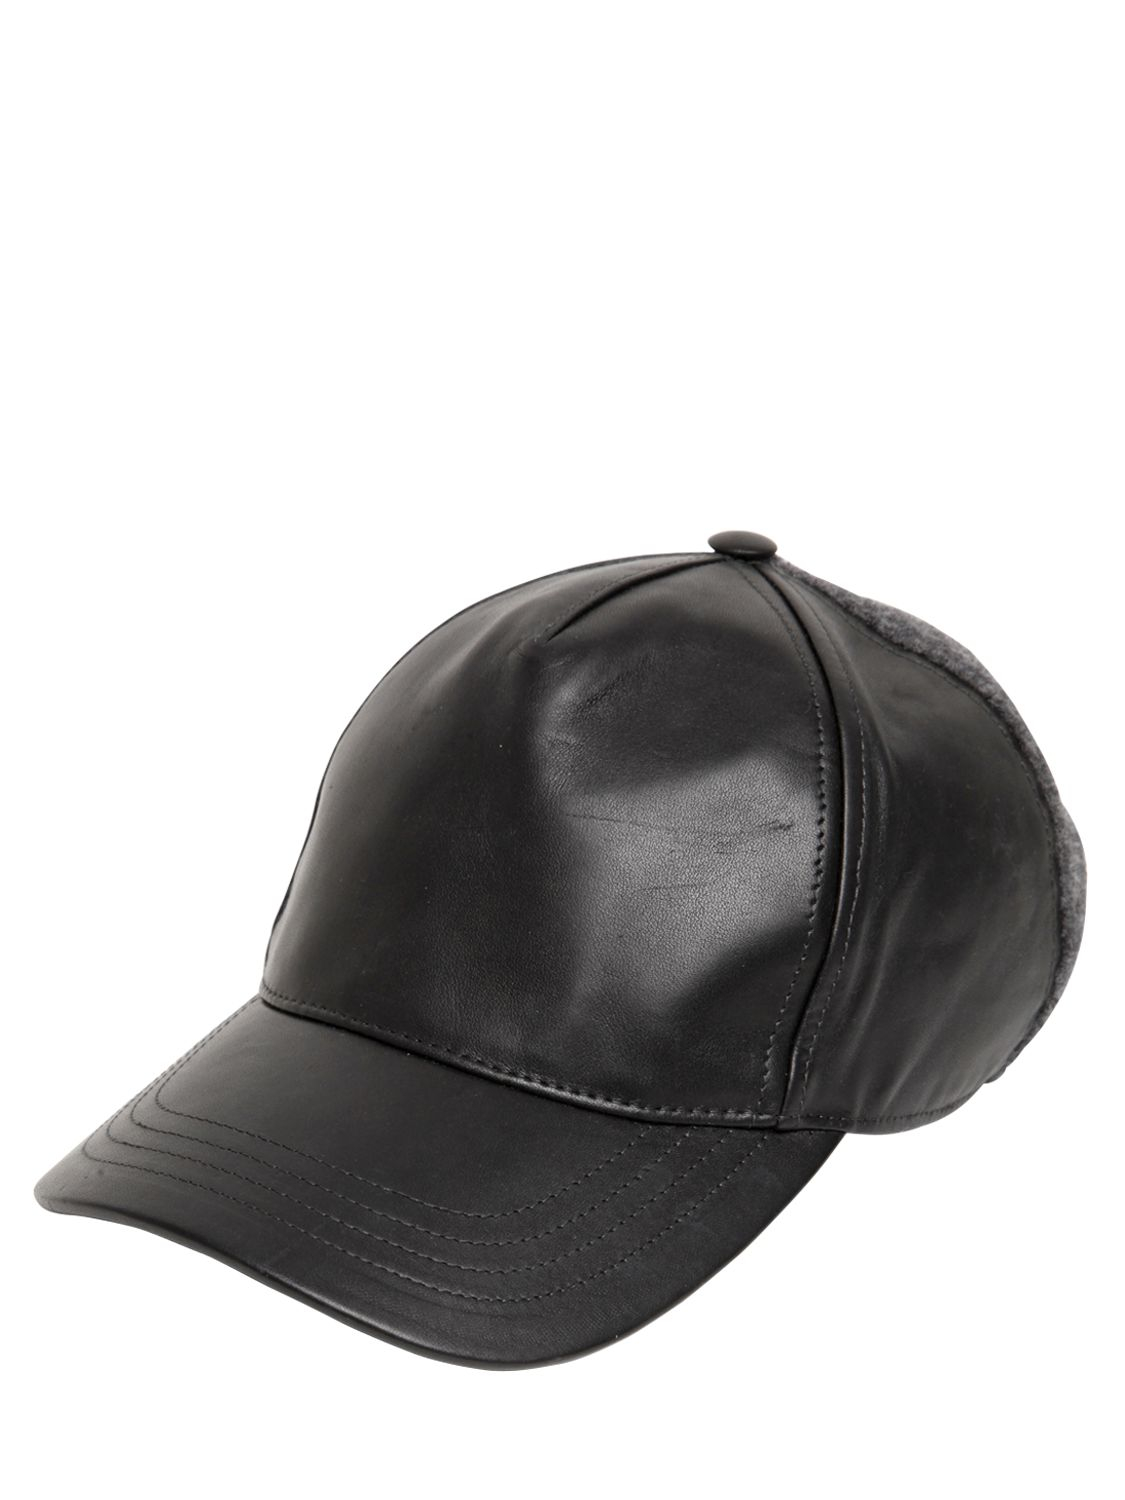 calvin klein blackgrey leather felted wool baseball hat black product 1 035628760 normal